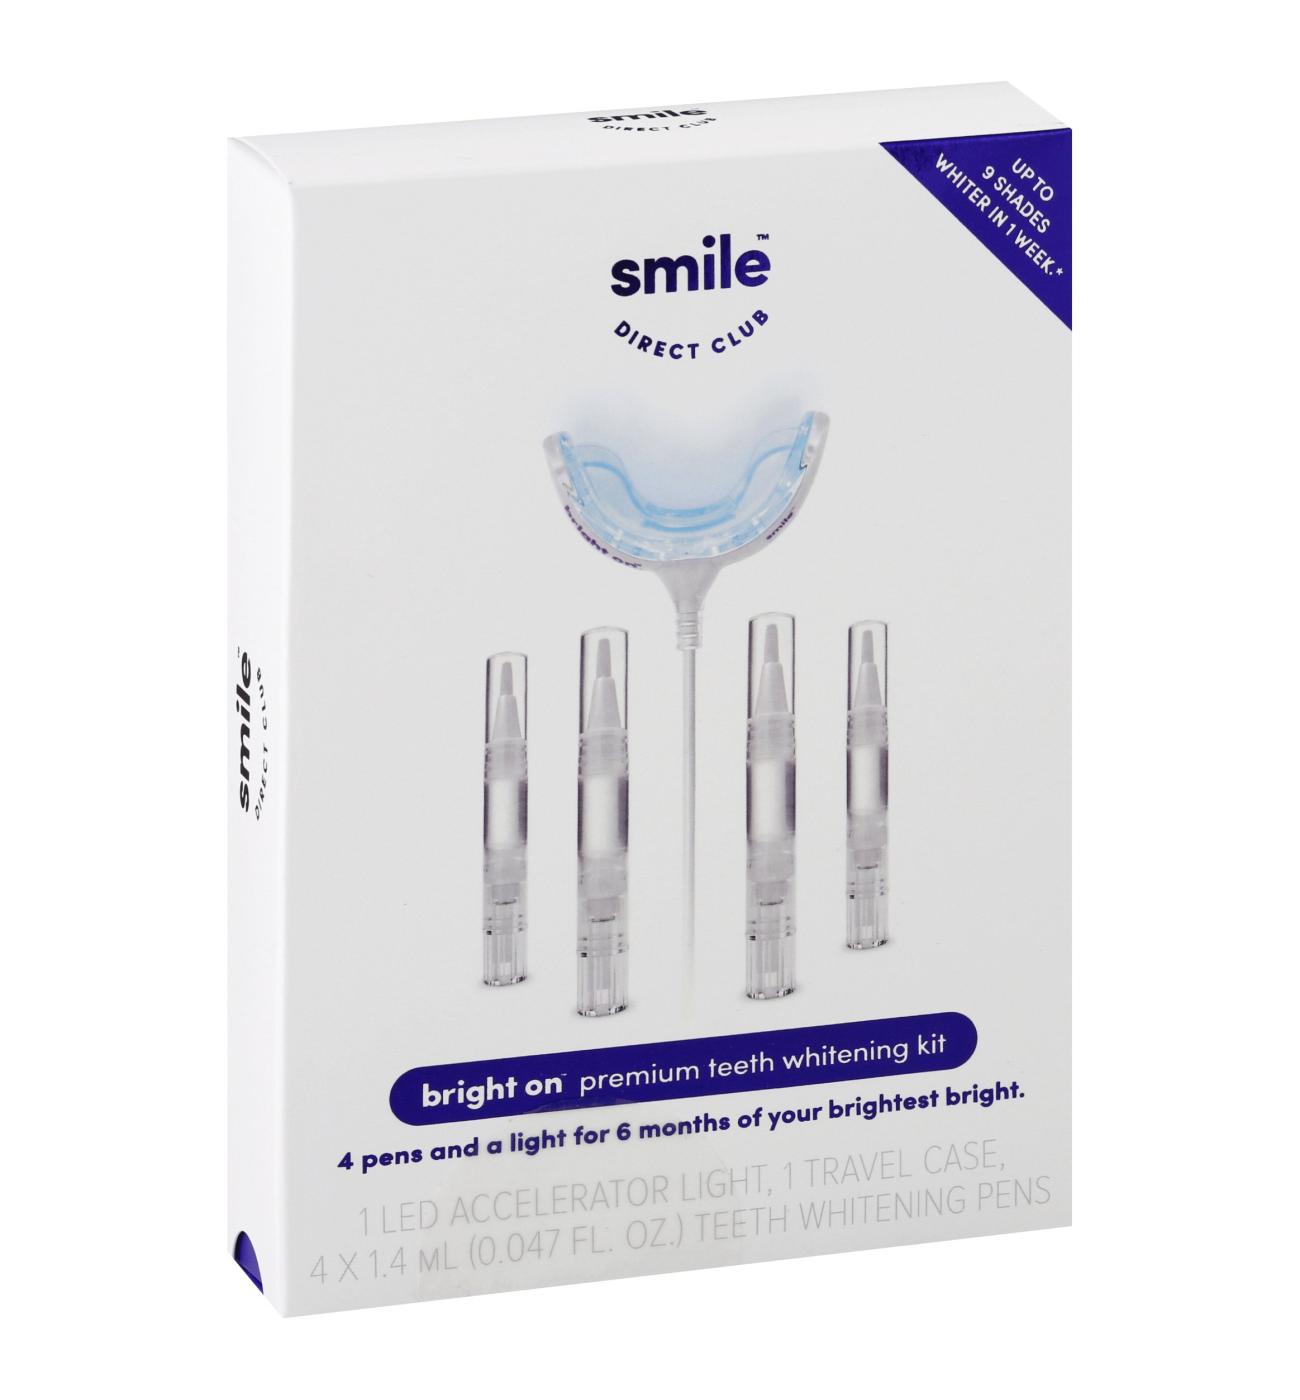 Smile Direct Club Bright On Premium Teeth Whitening Kit; image 1 of 2